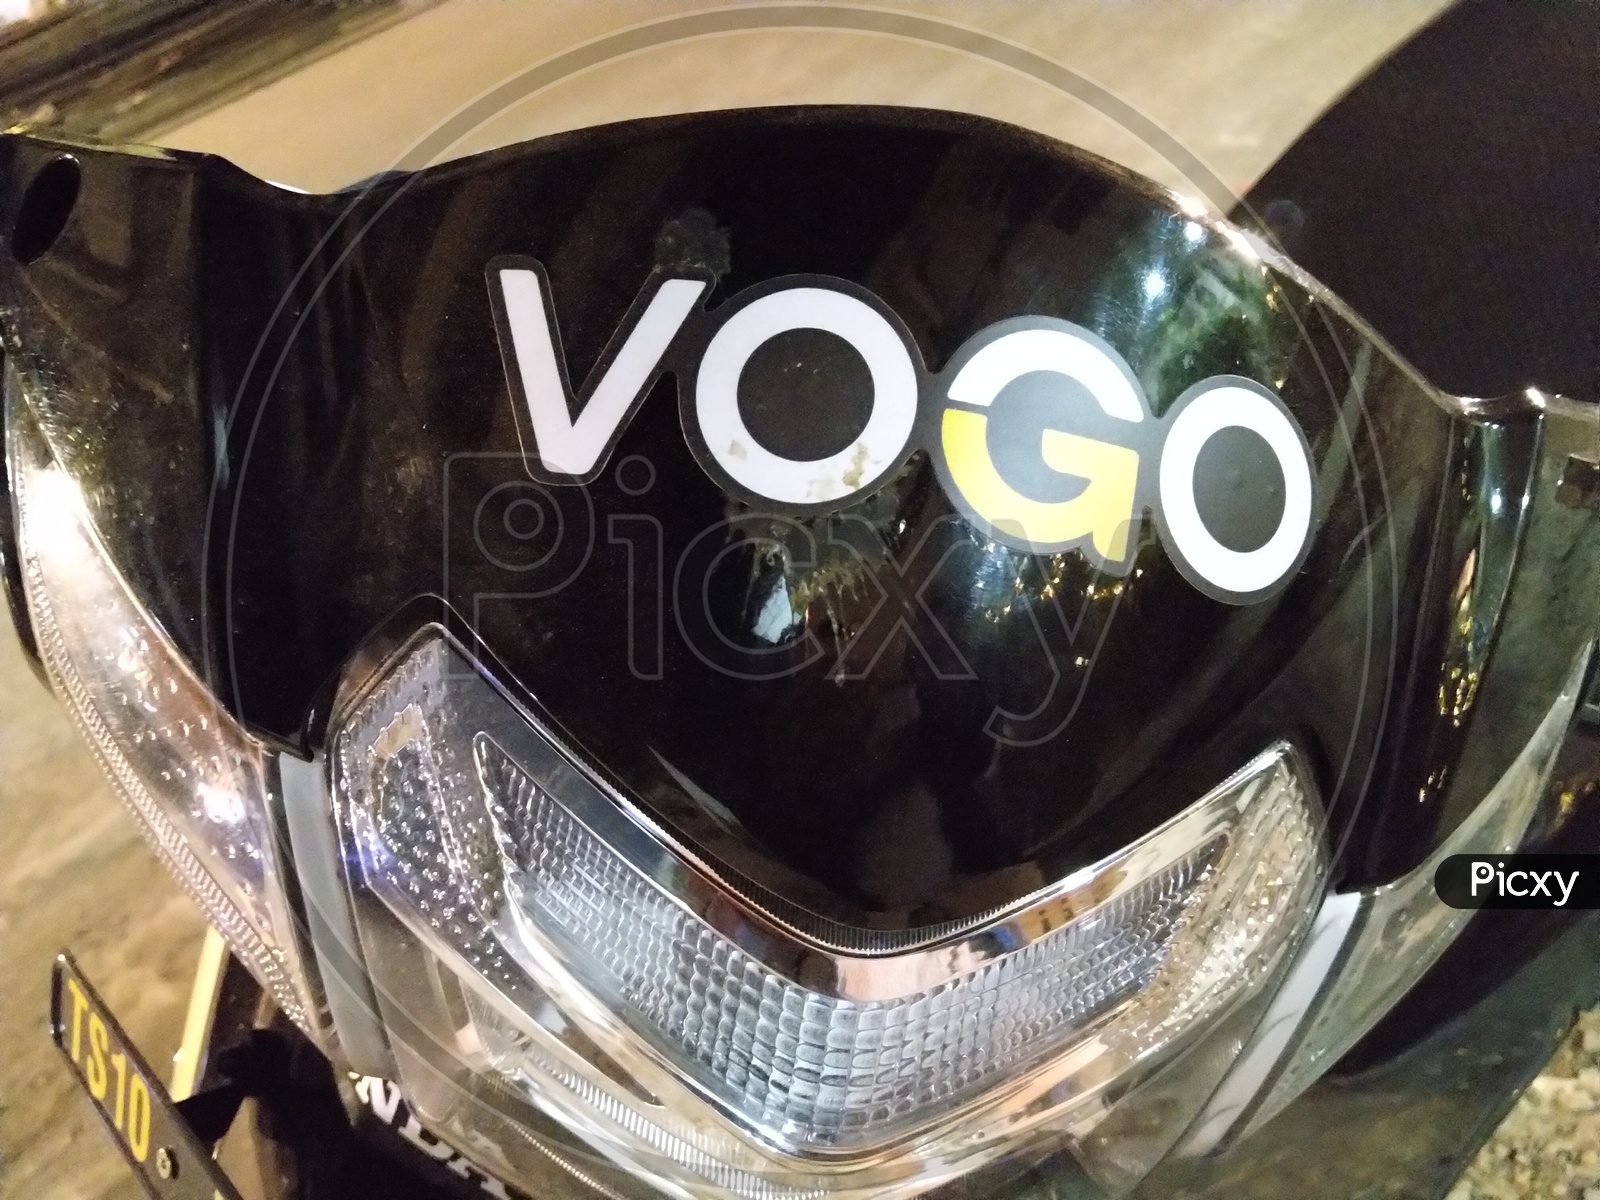 Closeup Shot of Vogo Logo, Vogo Bike Rentals